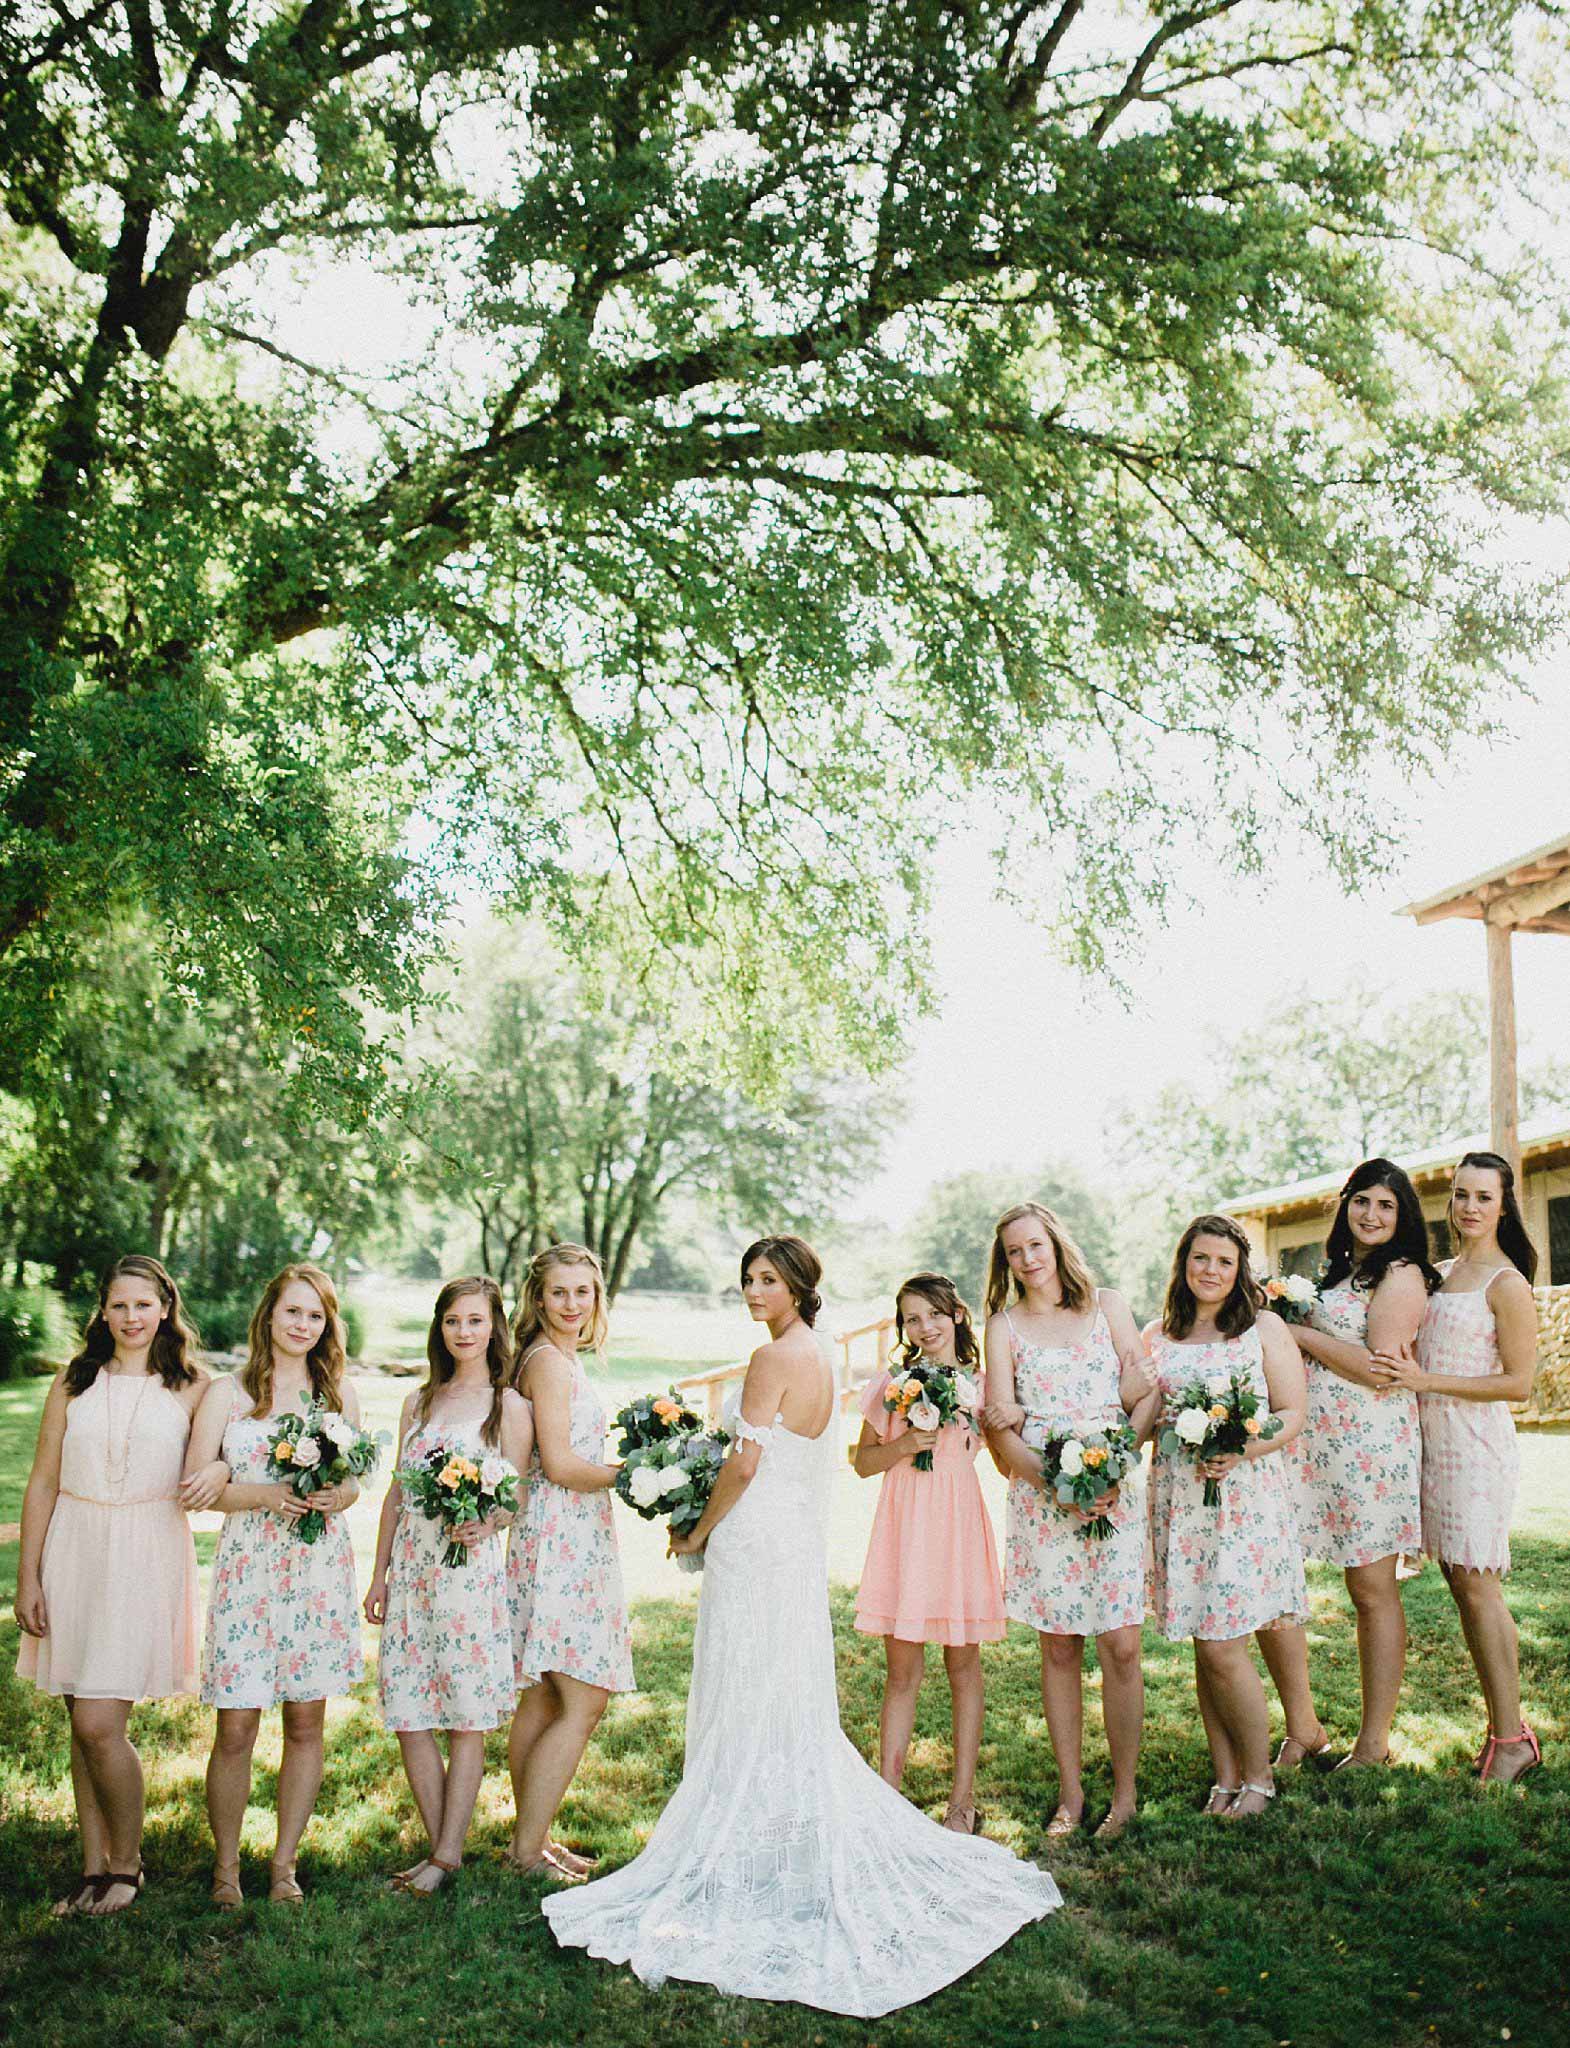 Bridesmaids where short floral print dress for a summer rustic wedding